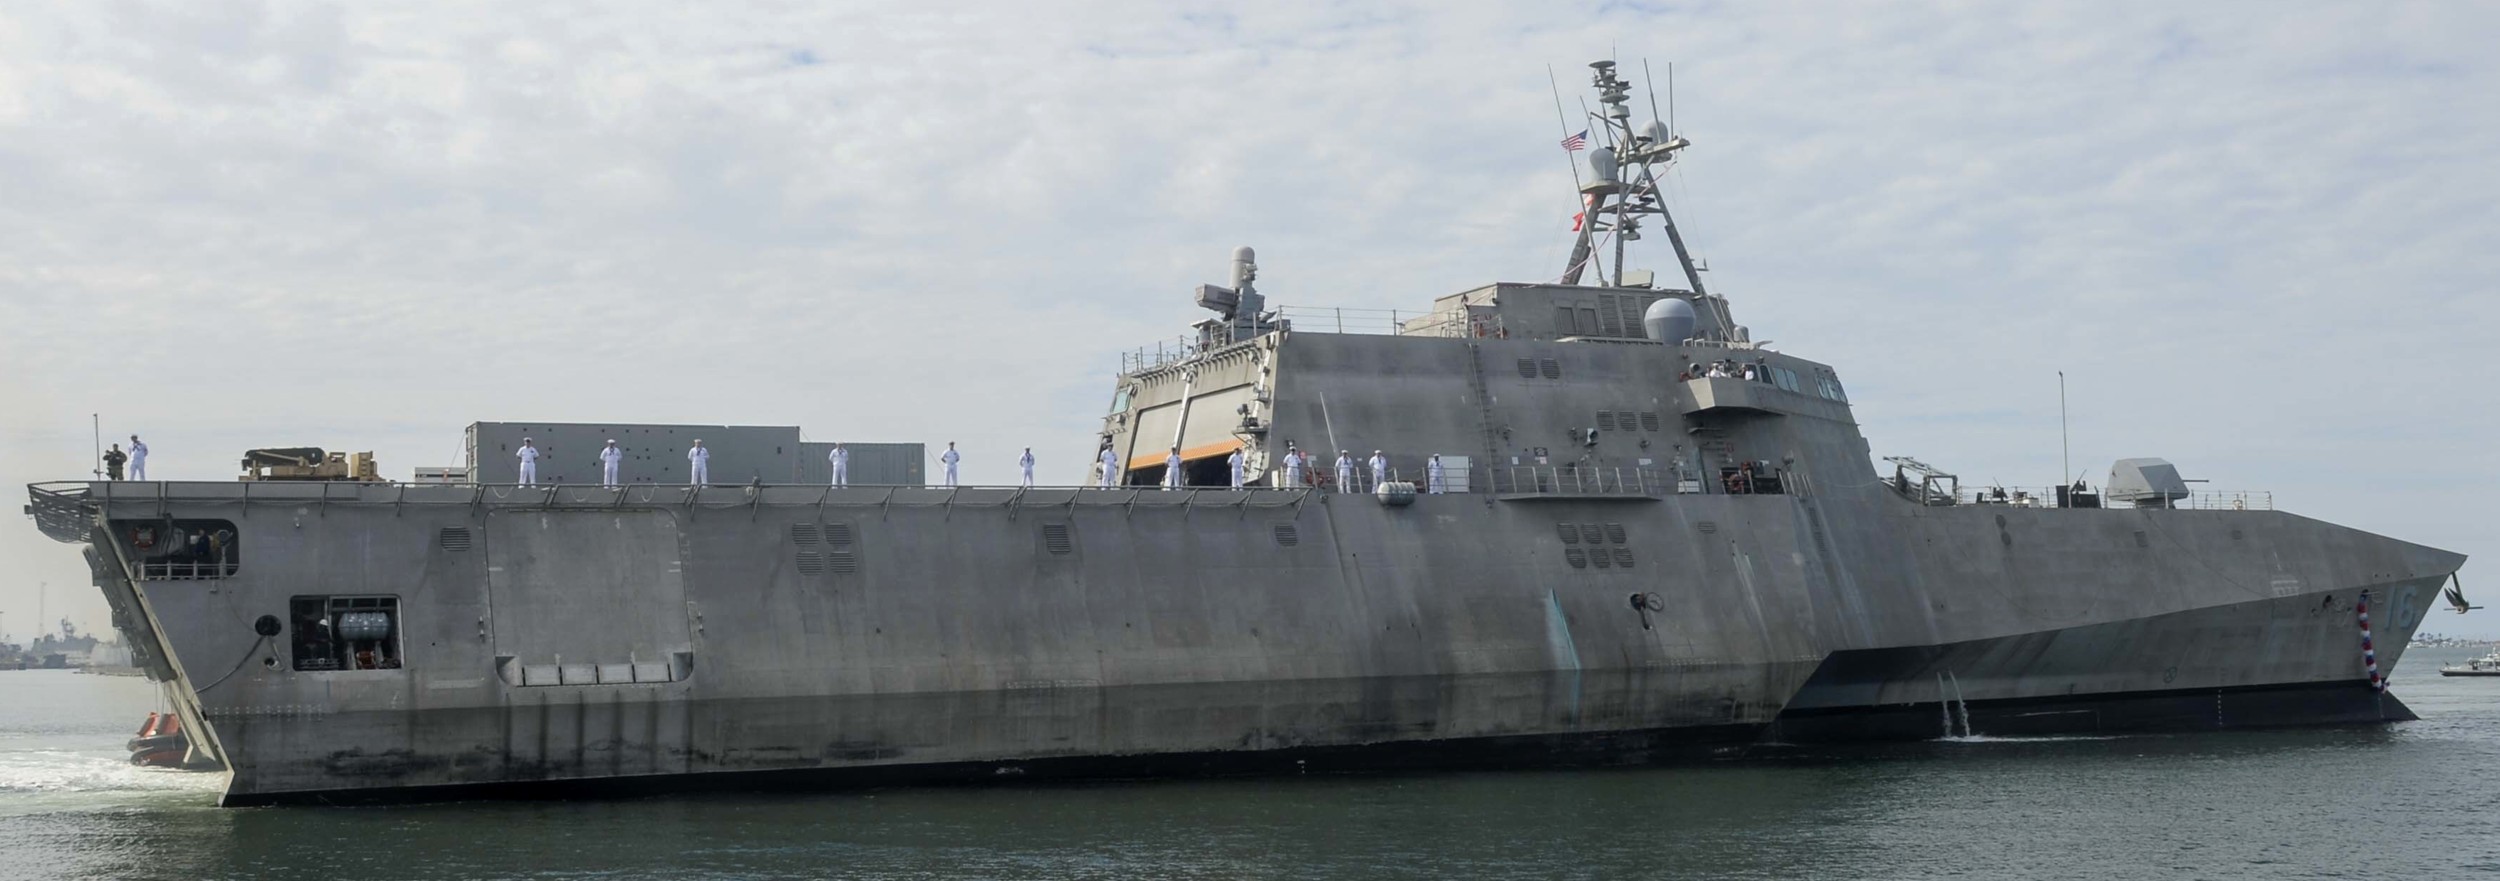 lcs-16 uss tulsa independence class littoral combat ship us navy naval base san diego 66